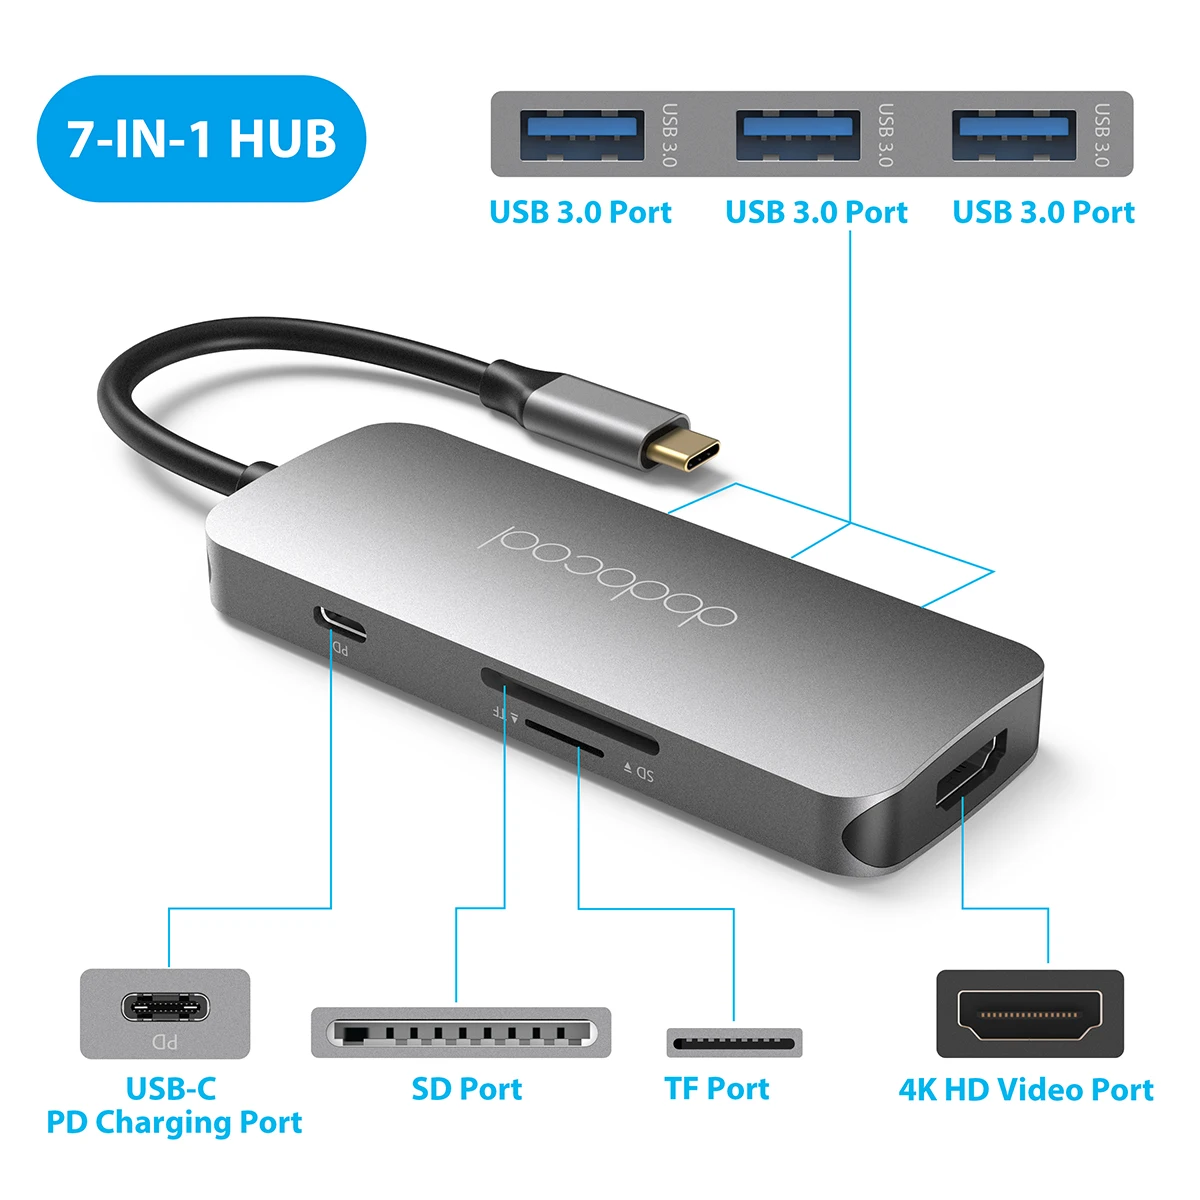 

UK/US/EU dodocool 7-in-1 Multifunction USB-C Hub 4K HD Output Port SD / TF Card Reader PD Charging Port and 3 USB 3.0 Ports